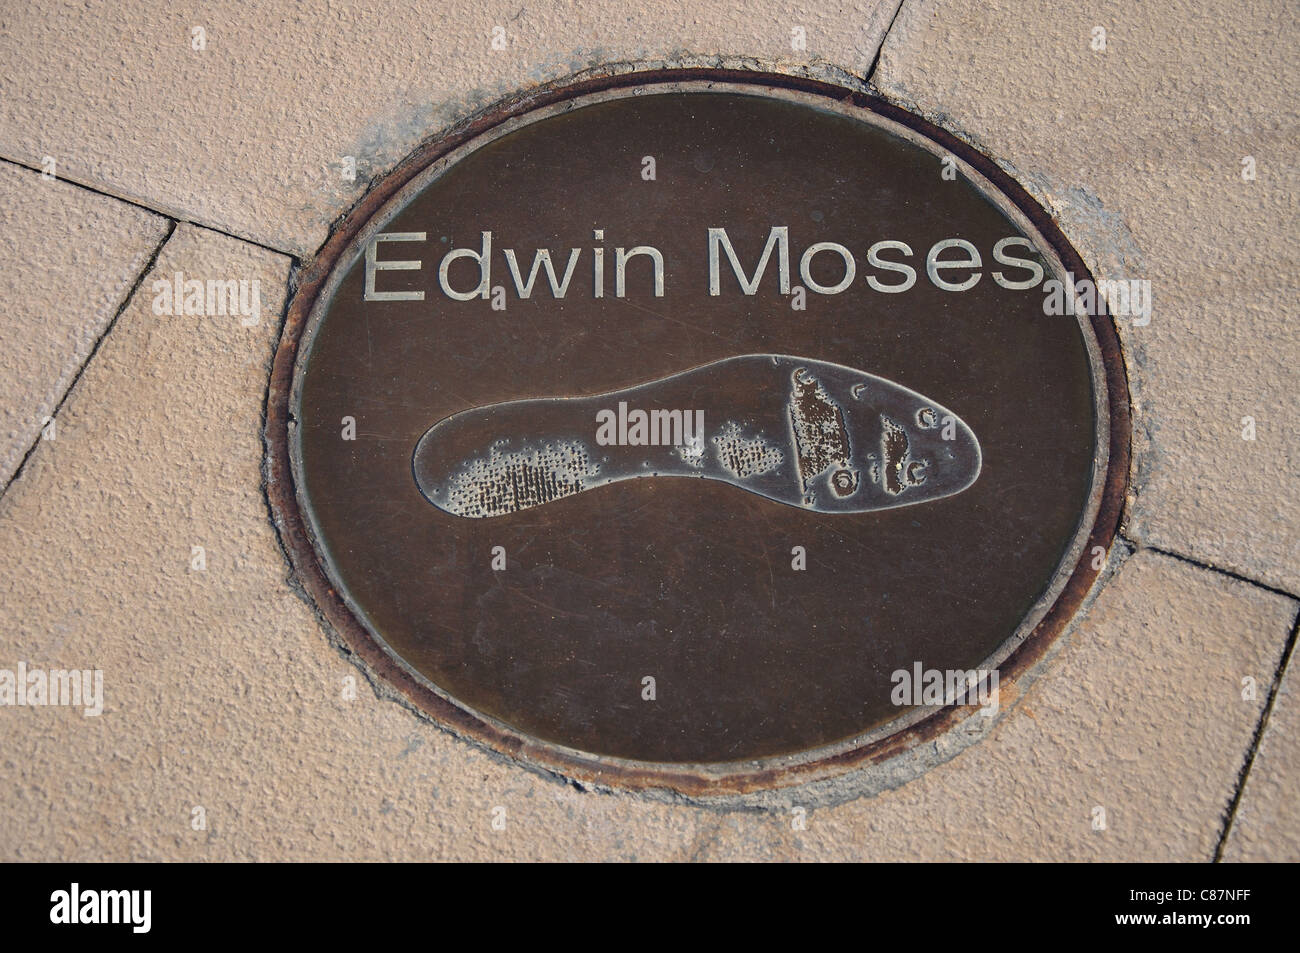 Edwin Moses plaque, Estadi Olímpic de Montjuïc (Olympic Stadium), Montjuïc, Barcelona, Province of Barcelona, Catalonia, Spain Stock Photo